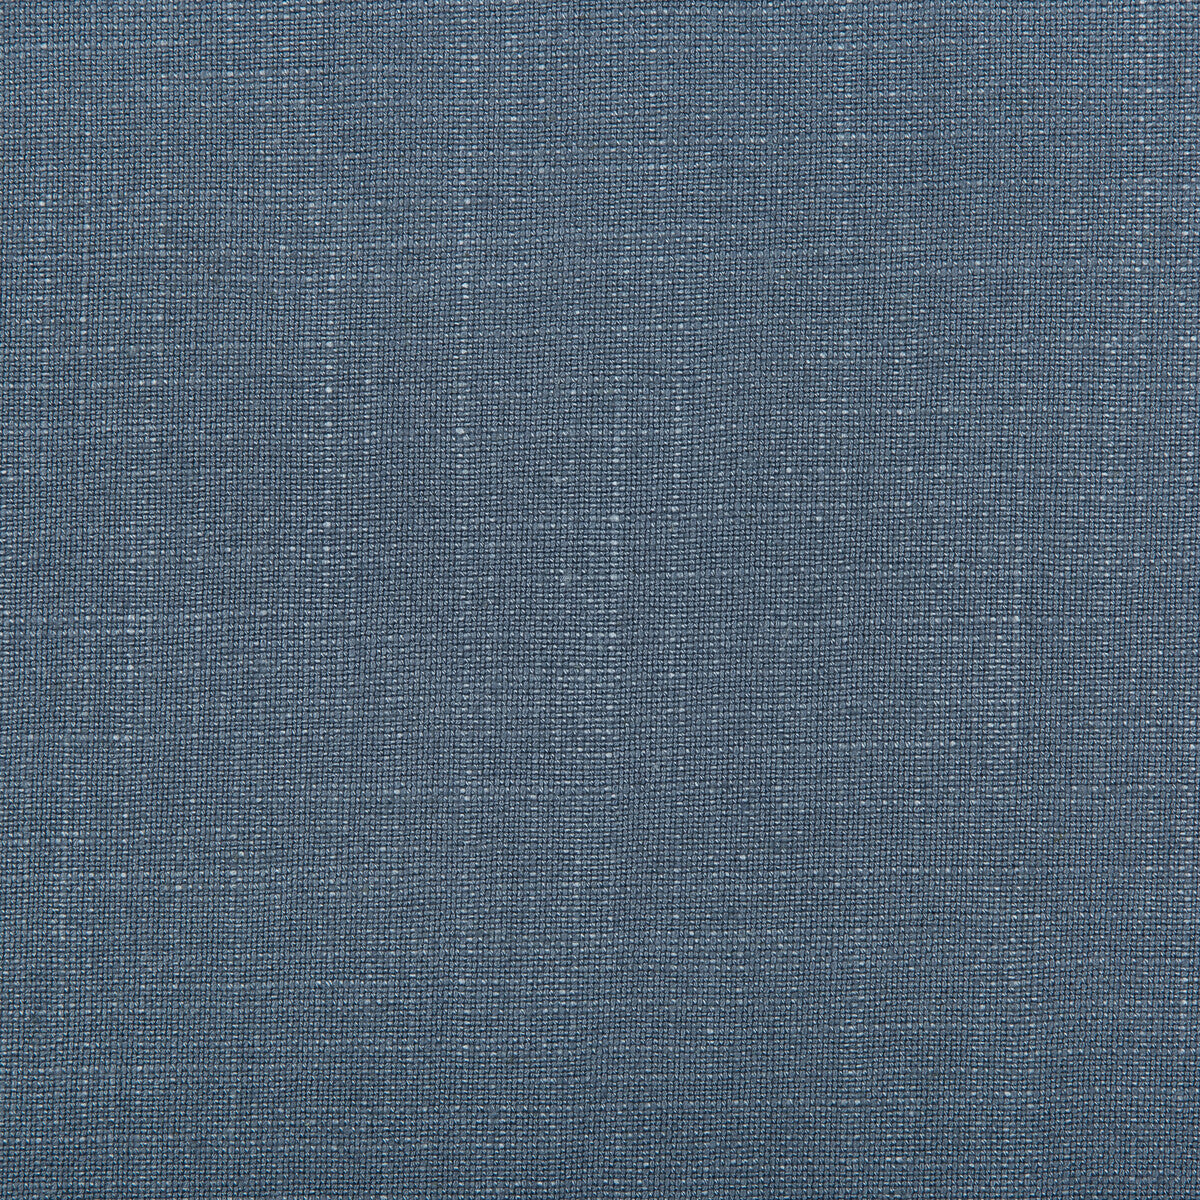 Aura fabric in marine color - pattern 35520.515.0 - by Kravet Design